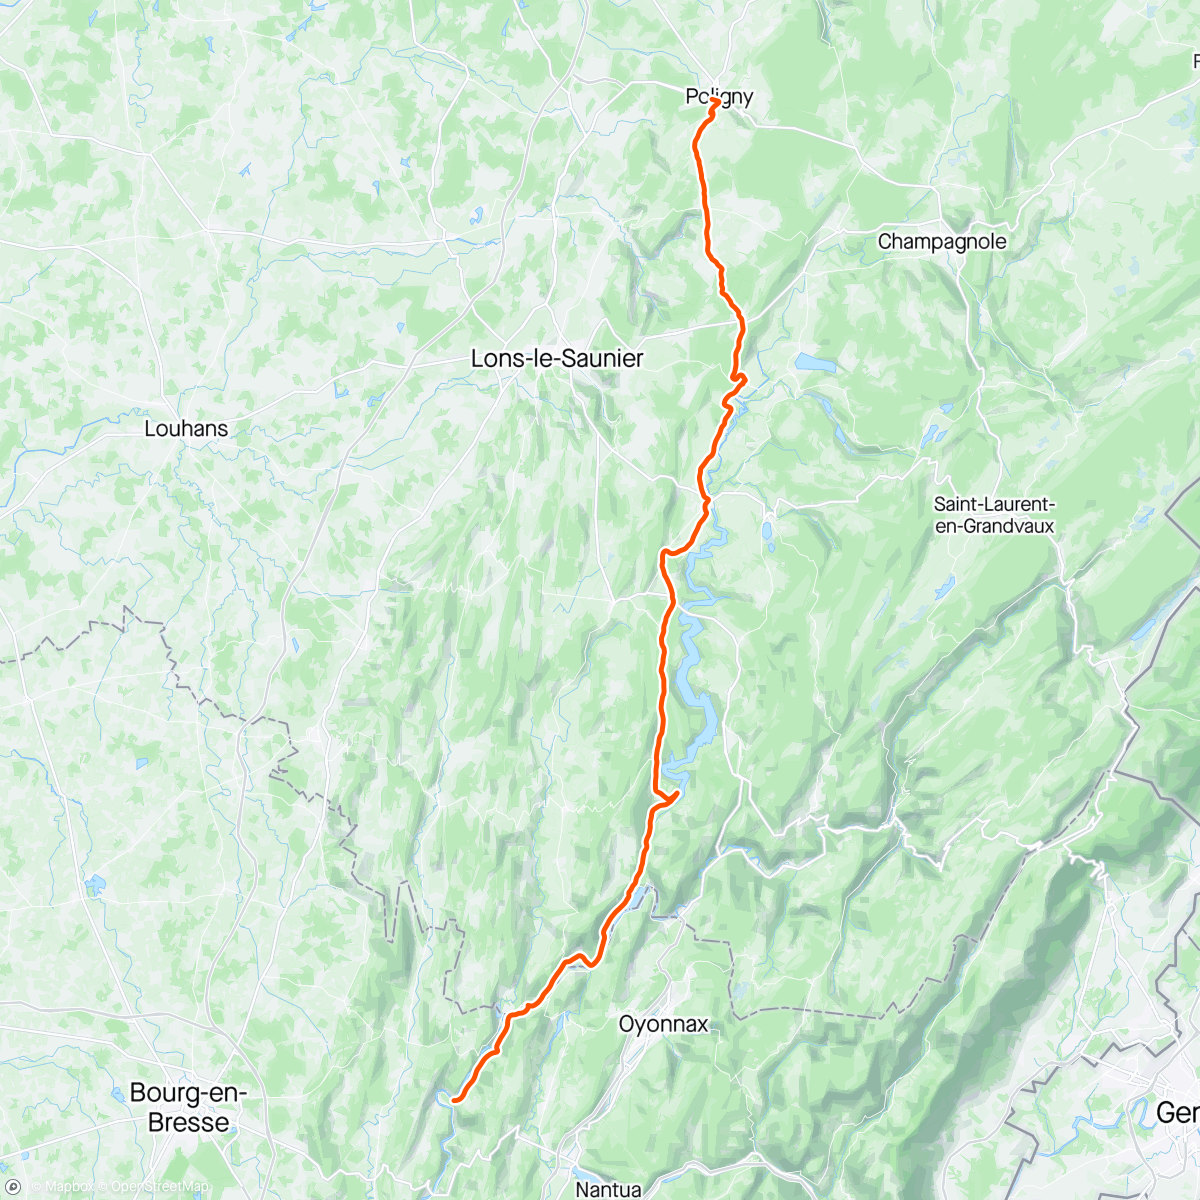 「Groene weg, etappe 6: Poligny - L’isle D’Abeau 190km」活動的地圖